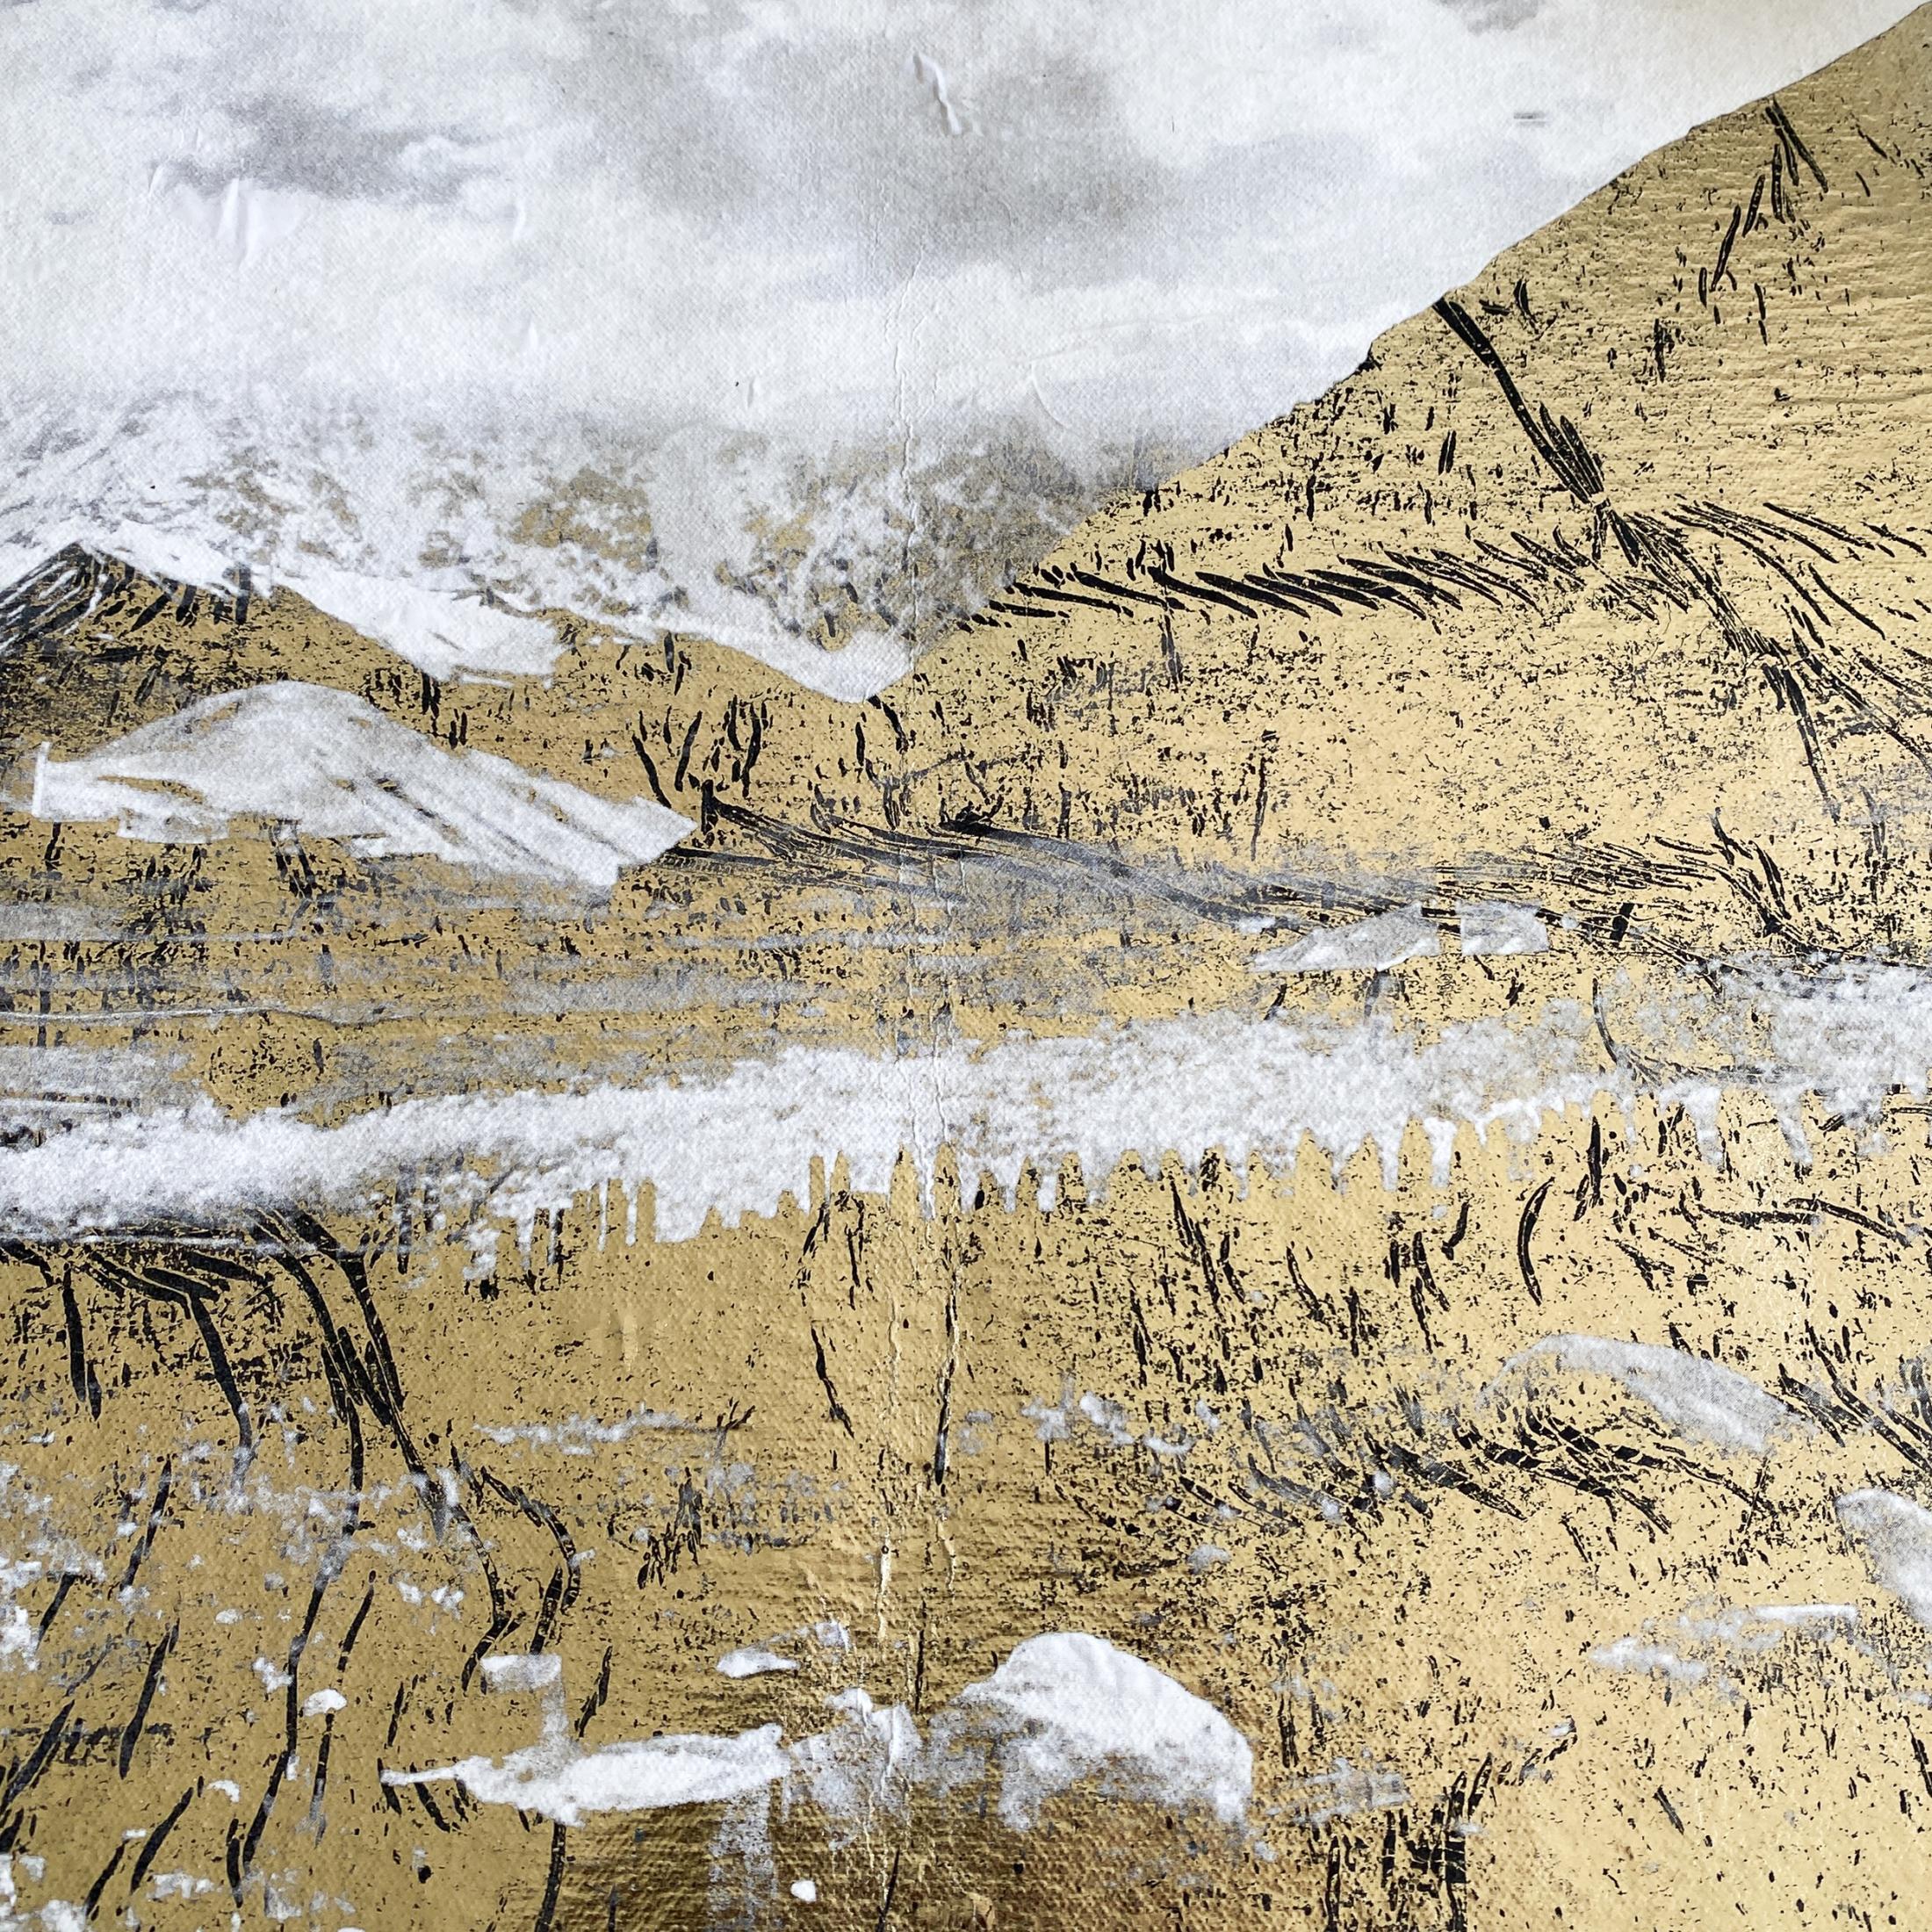 Ushguli With Shakra Mountain - Gray Landscape Painting by Bill Claps